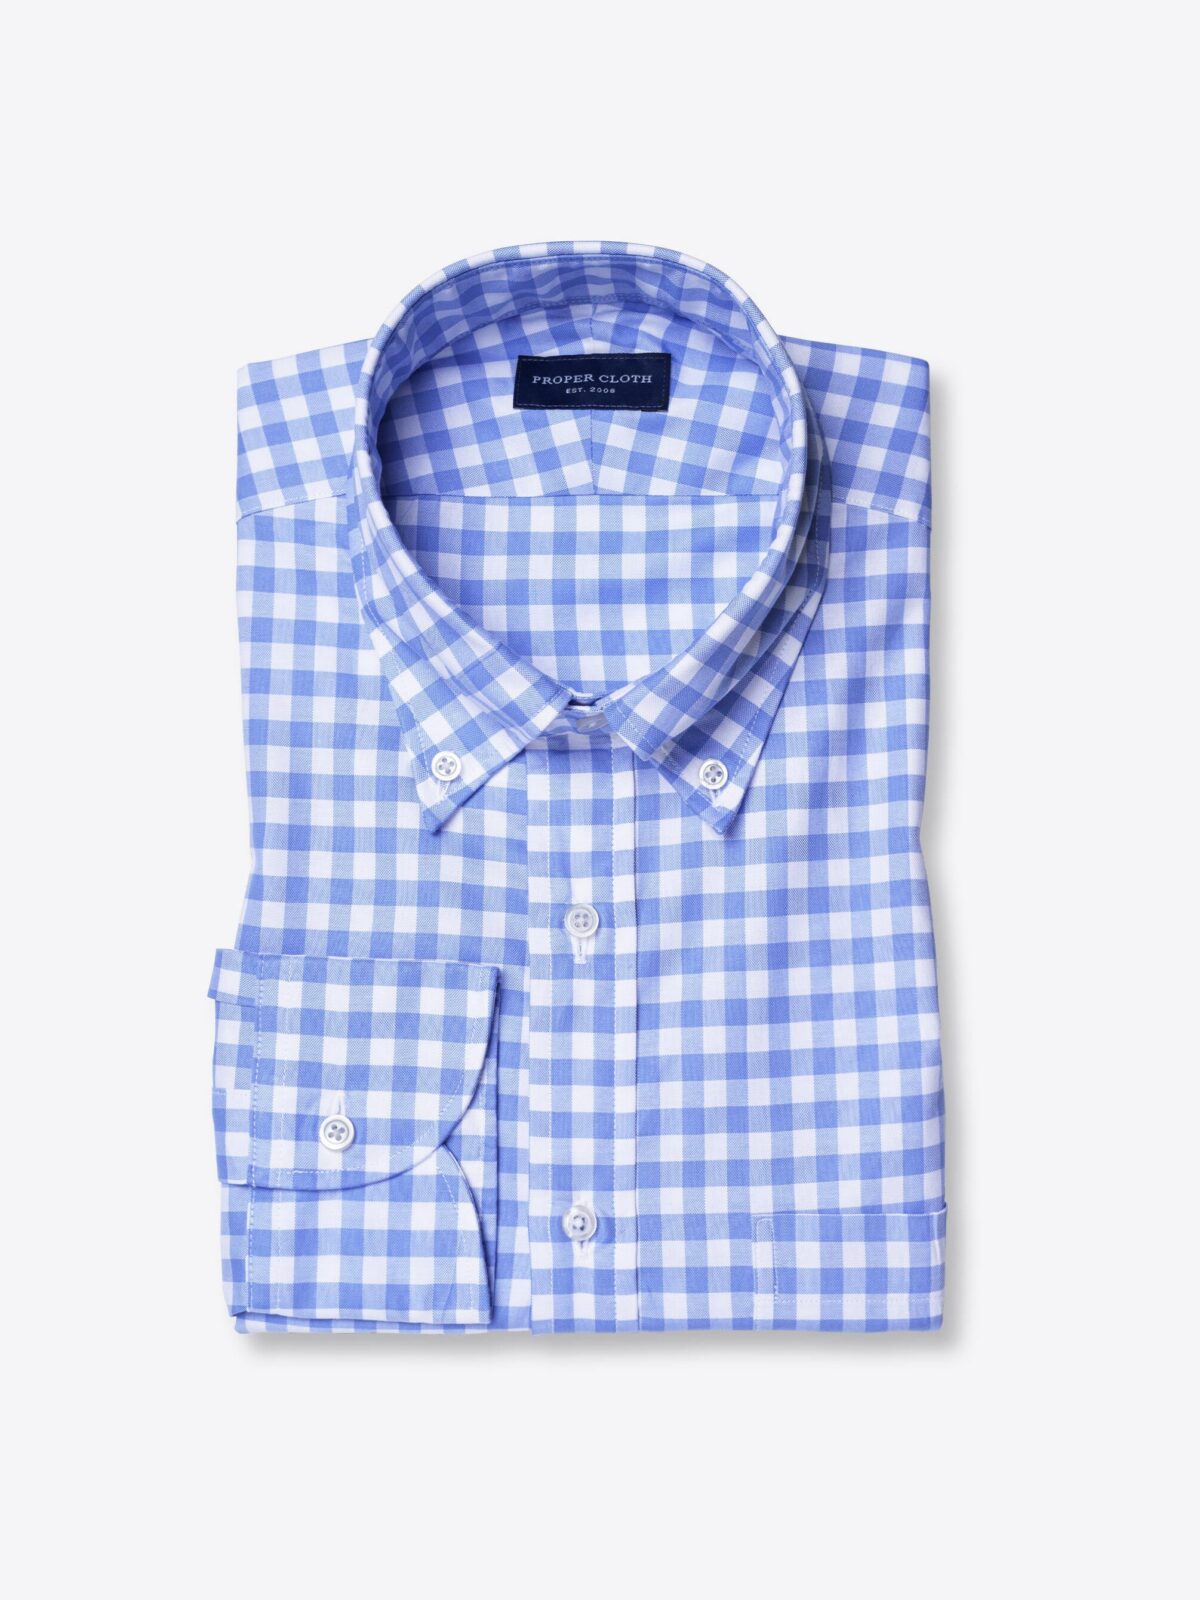 Light Blue Oxford Cloth Shirt by Proper Cloth